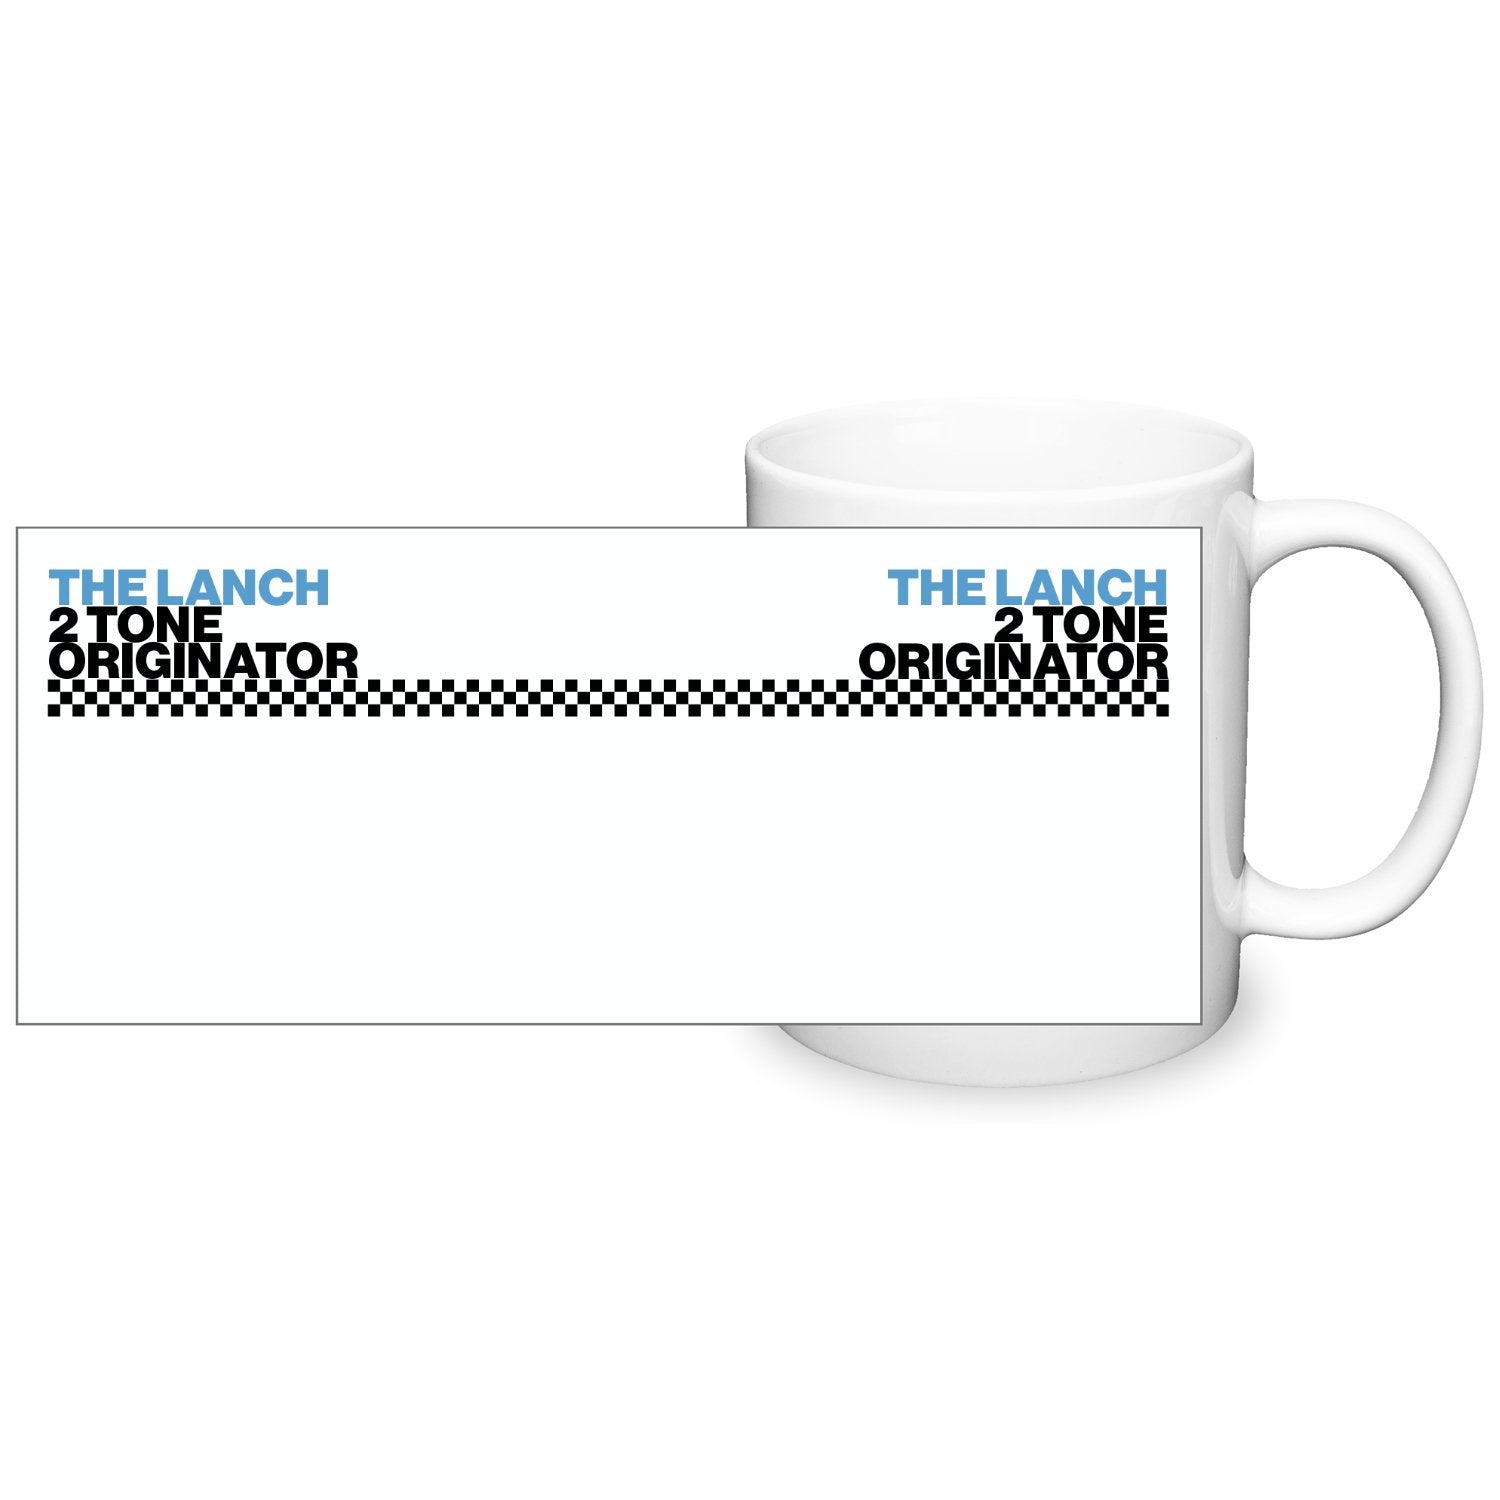 The Lanch - 2 Tone Originator - mug - Dirty Stop Outs